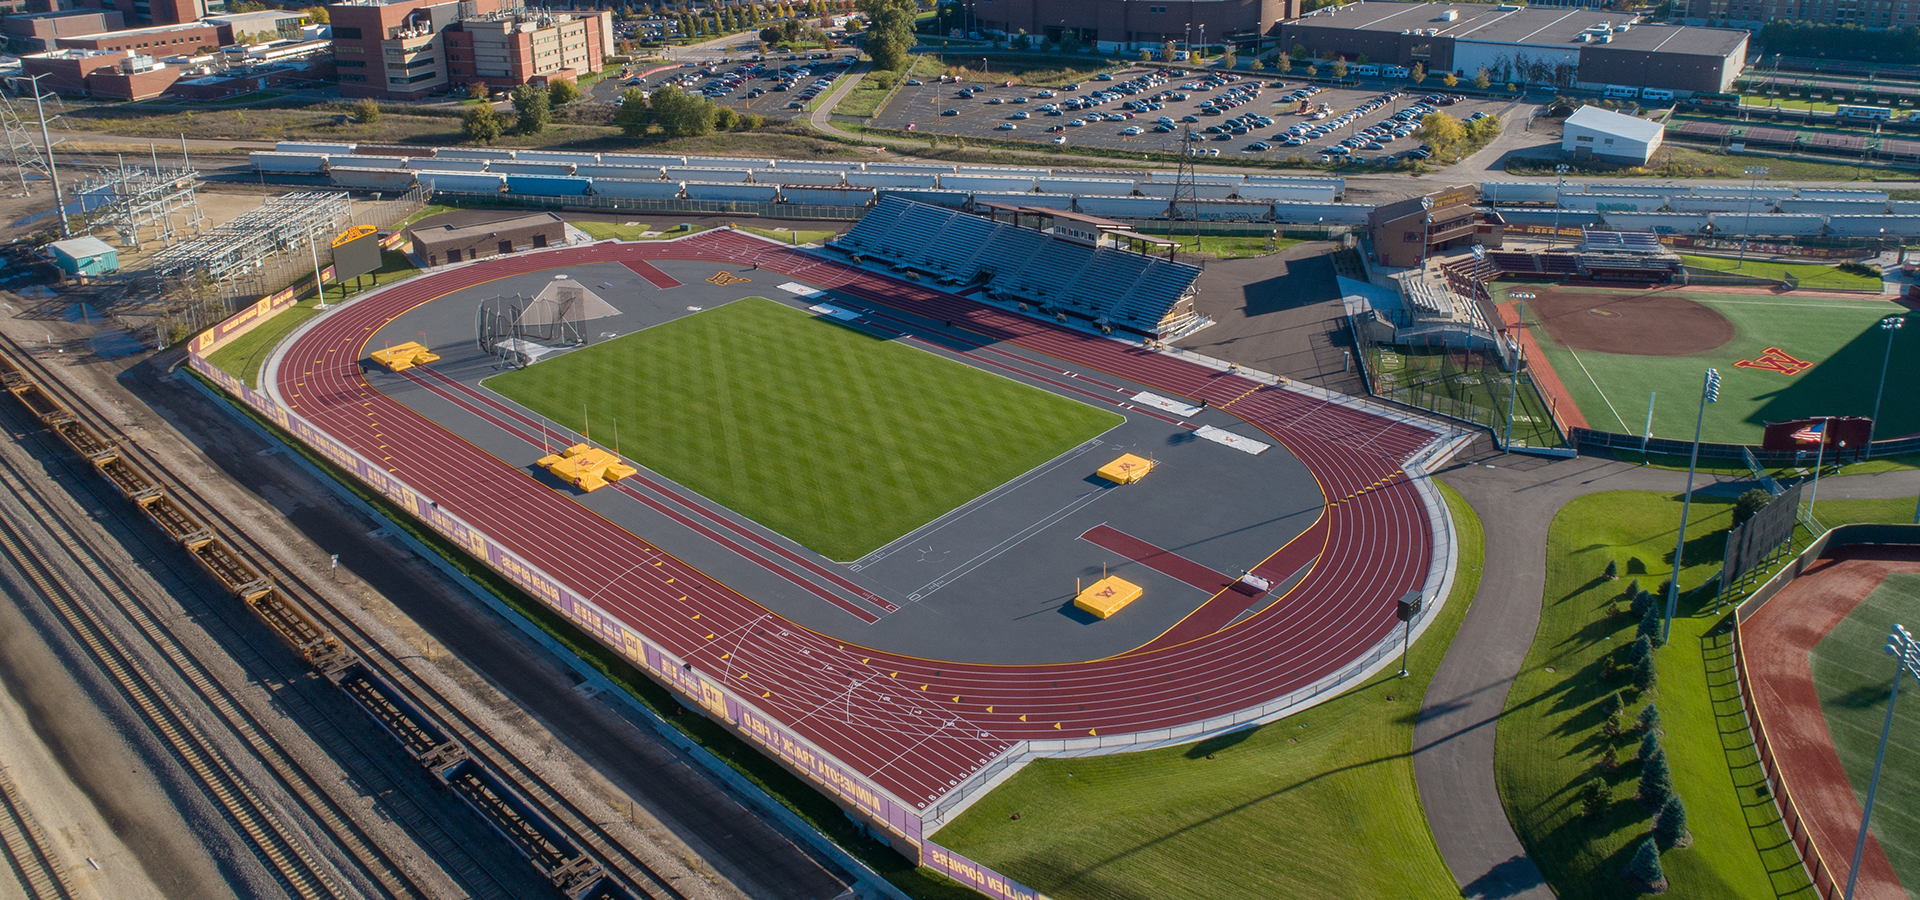 Track & Field Facility